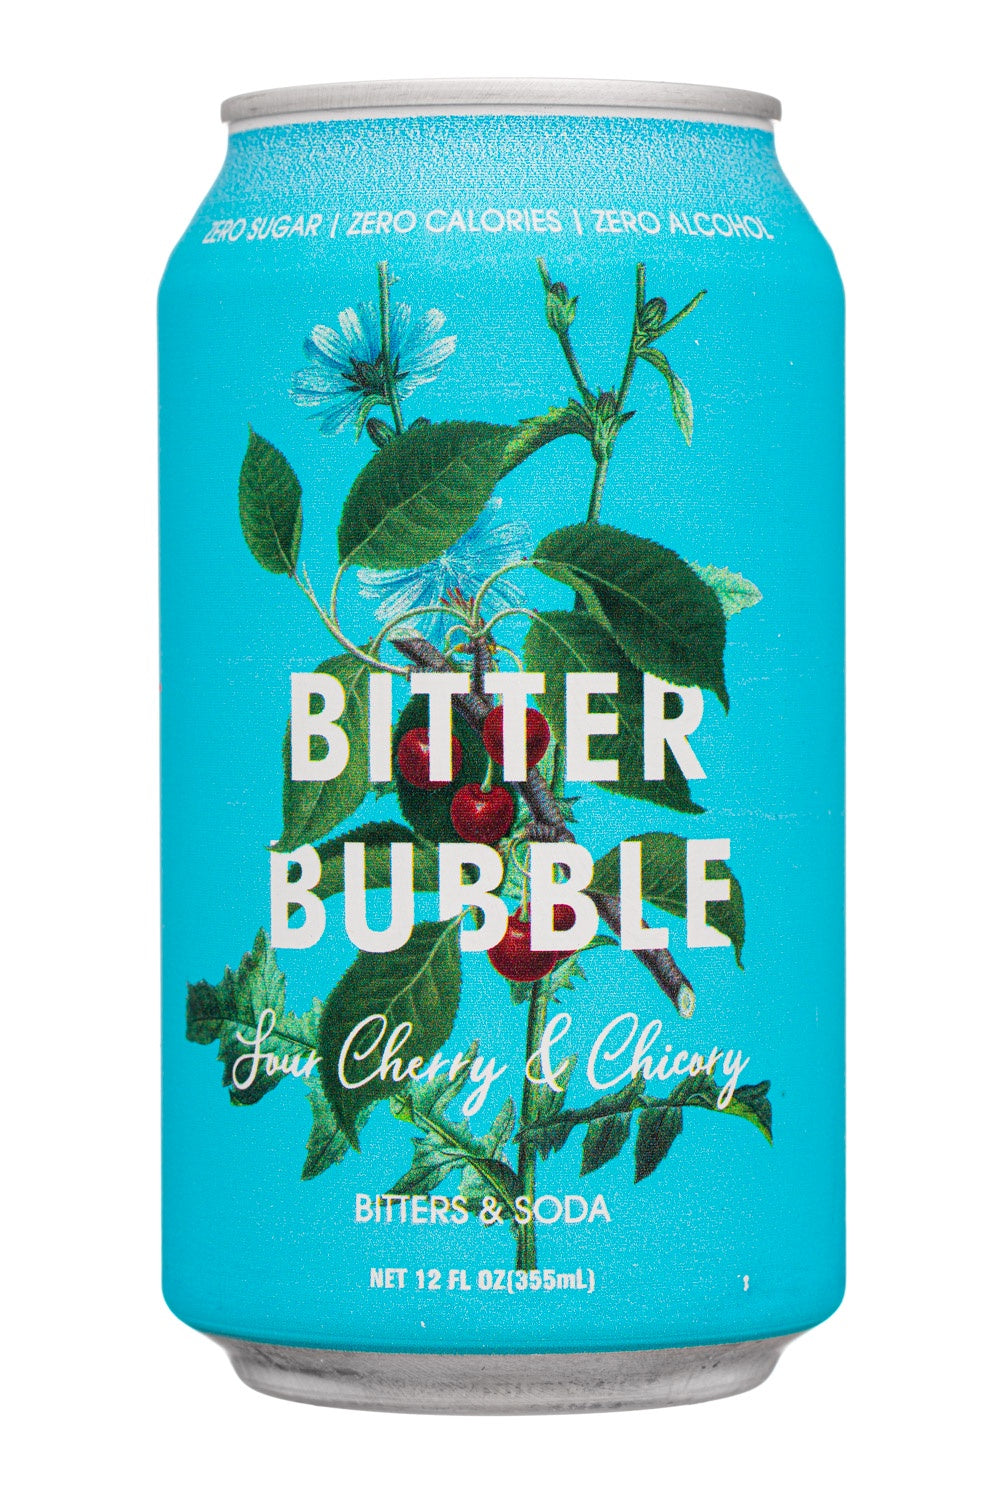 Bitter Bubble: Sour Cherry & Chicory